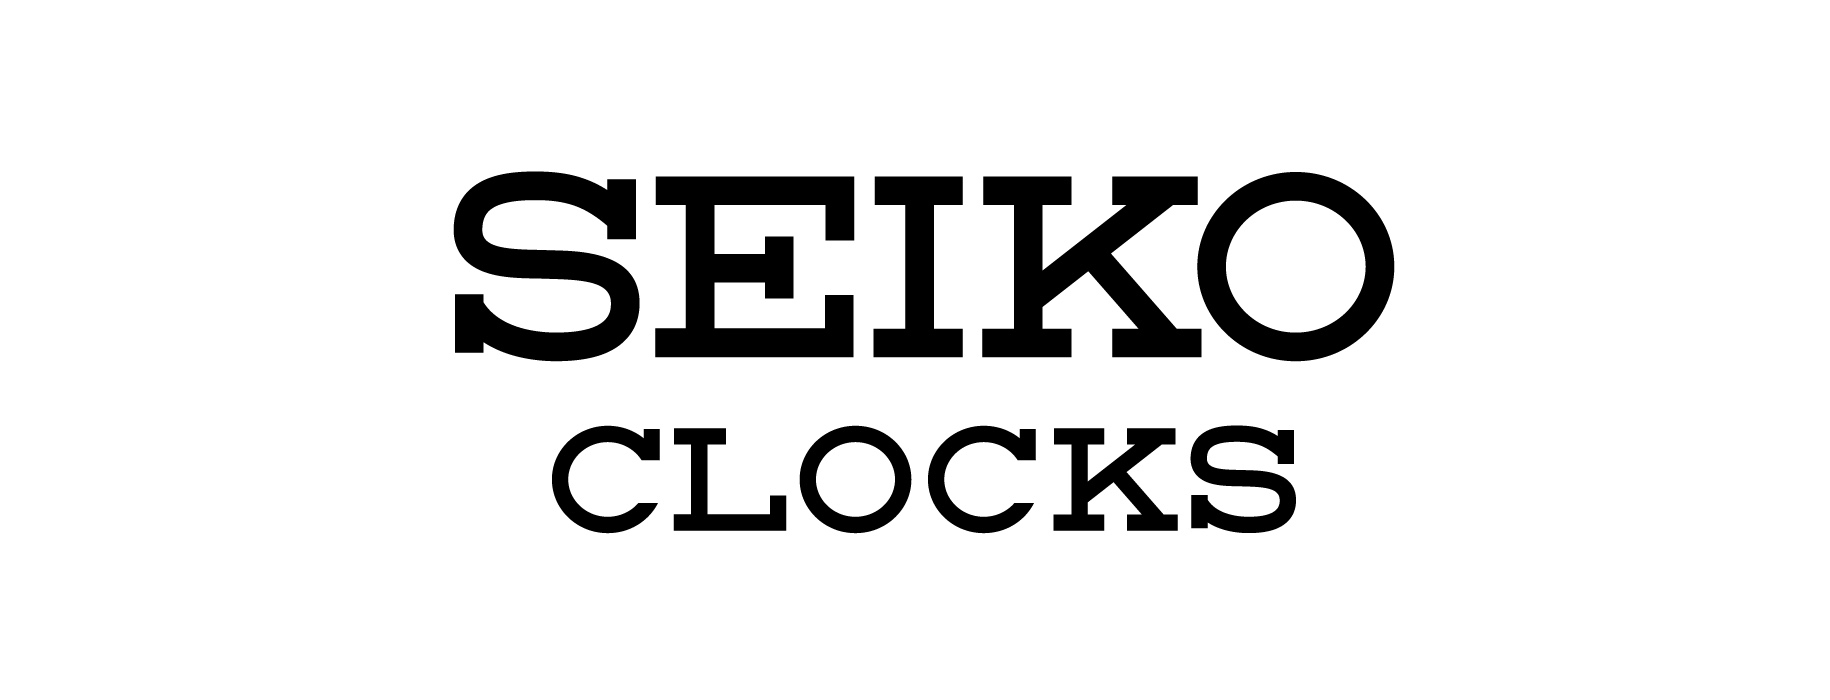 Webpage logo - Clock